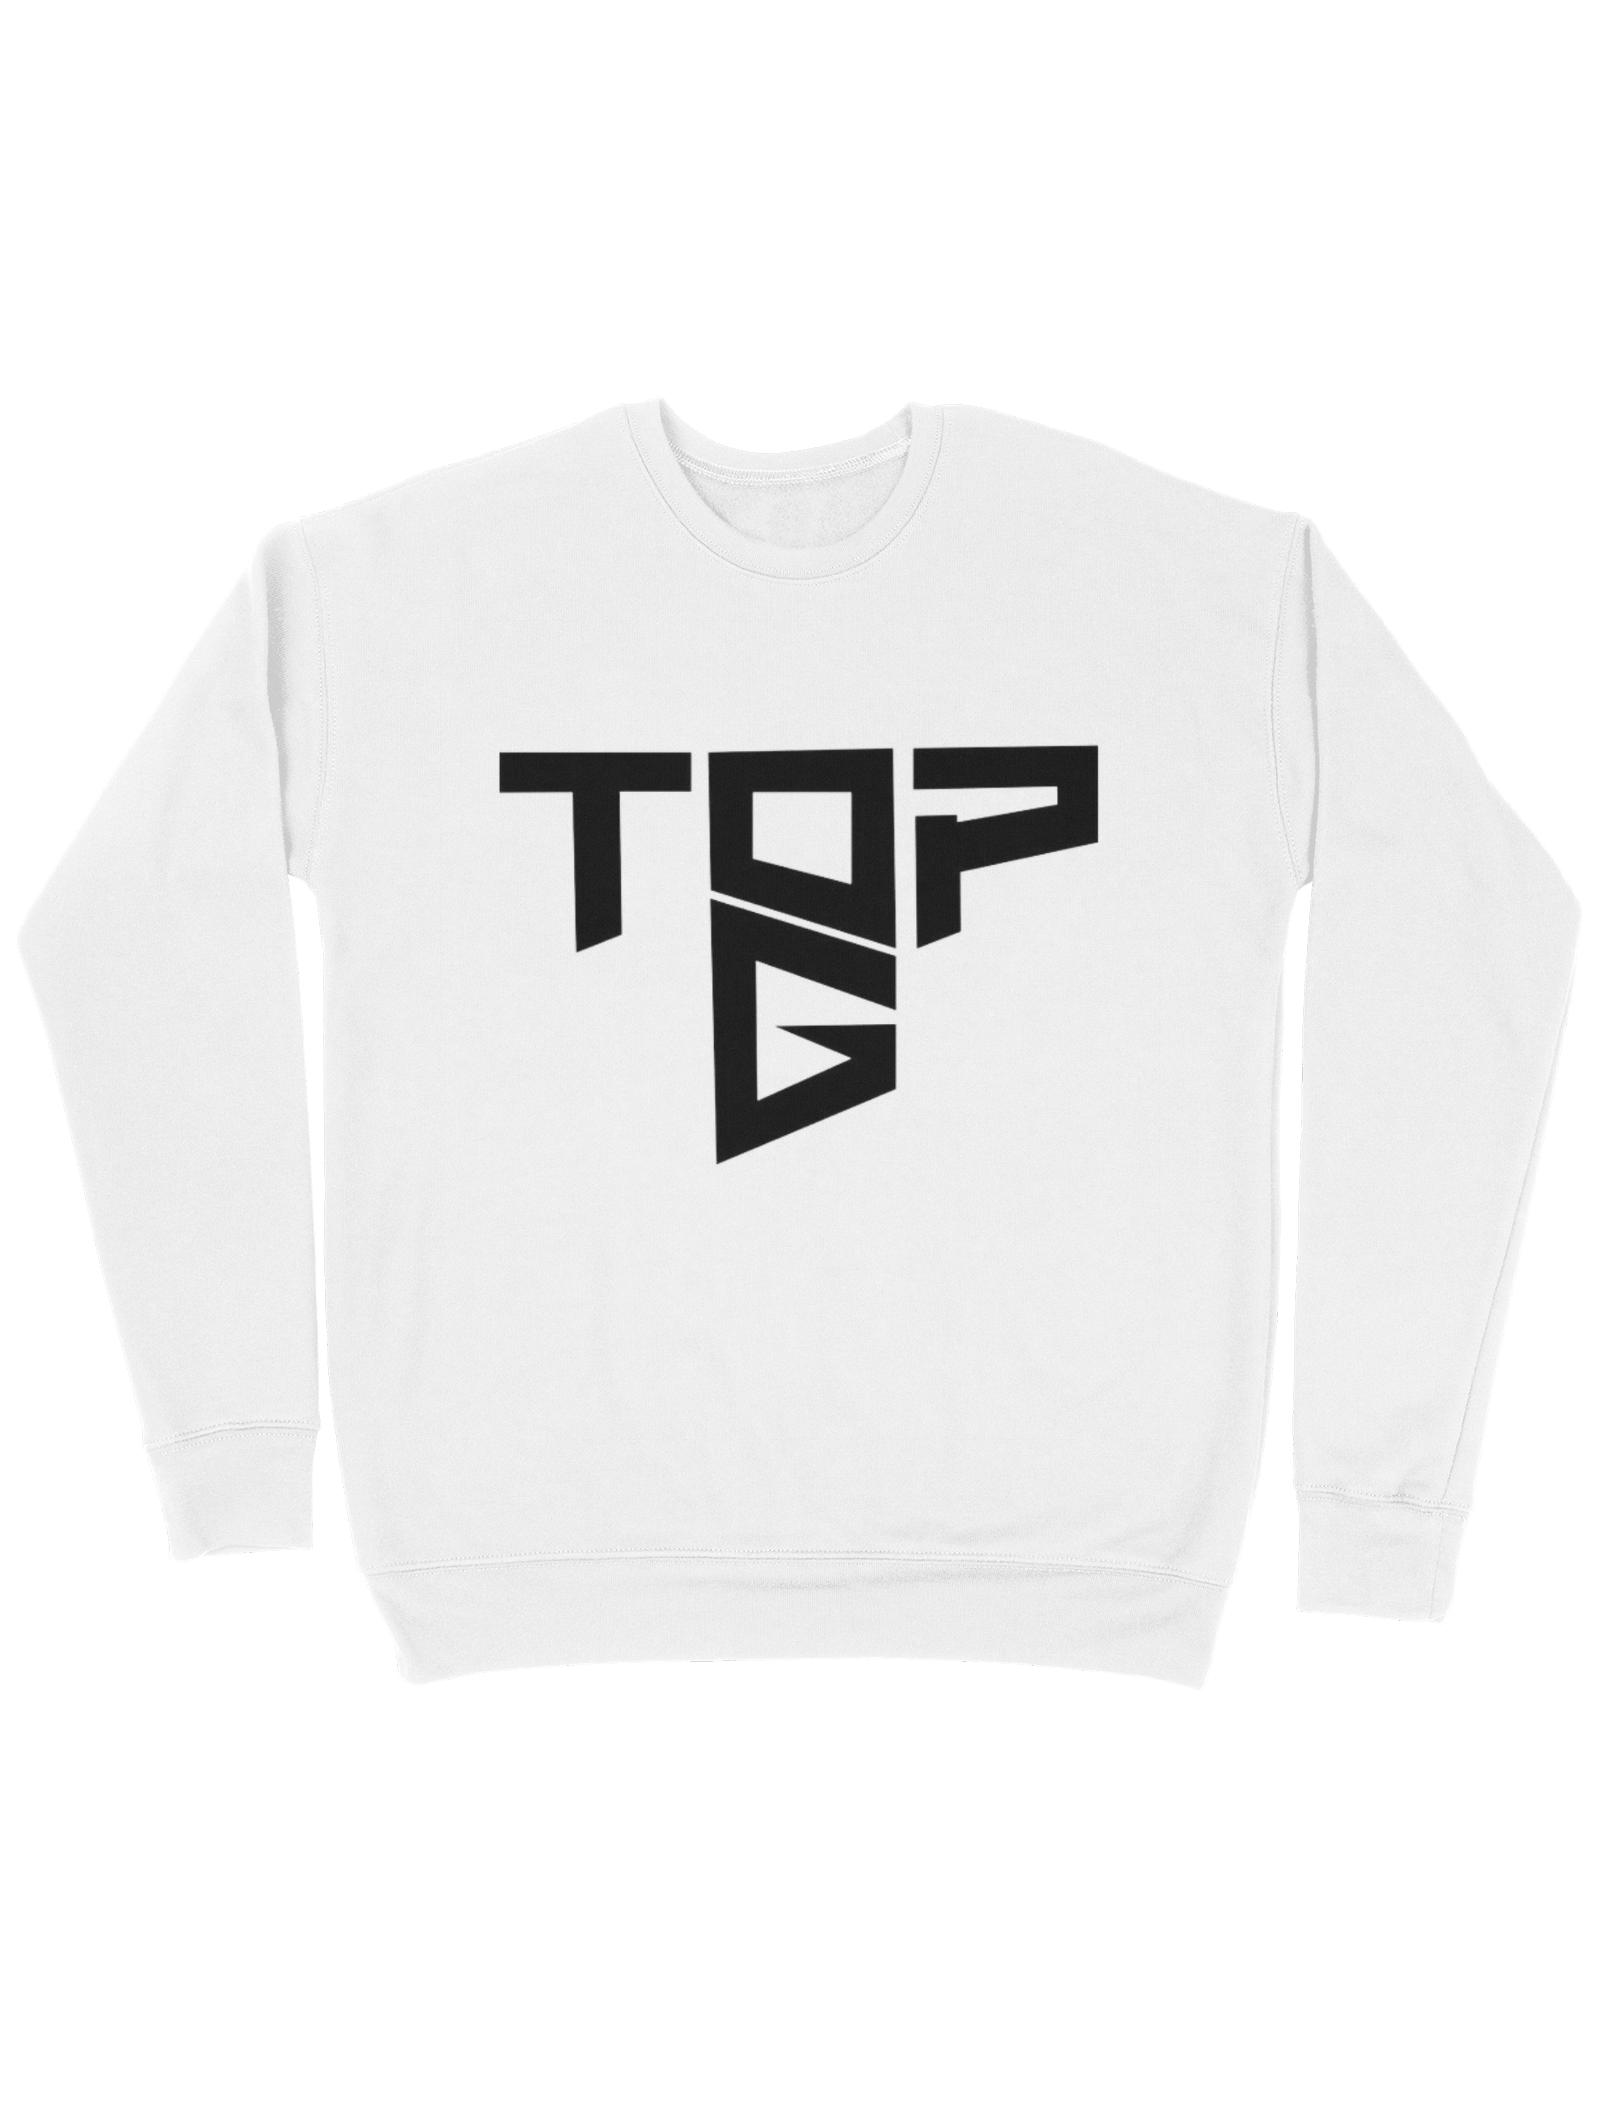 TopG Orijinal Yazılı Sweatshirt